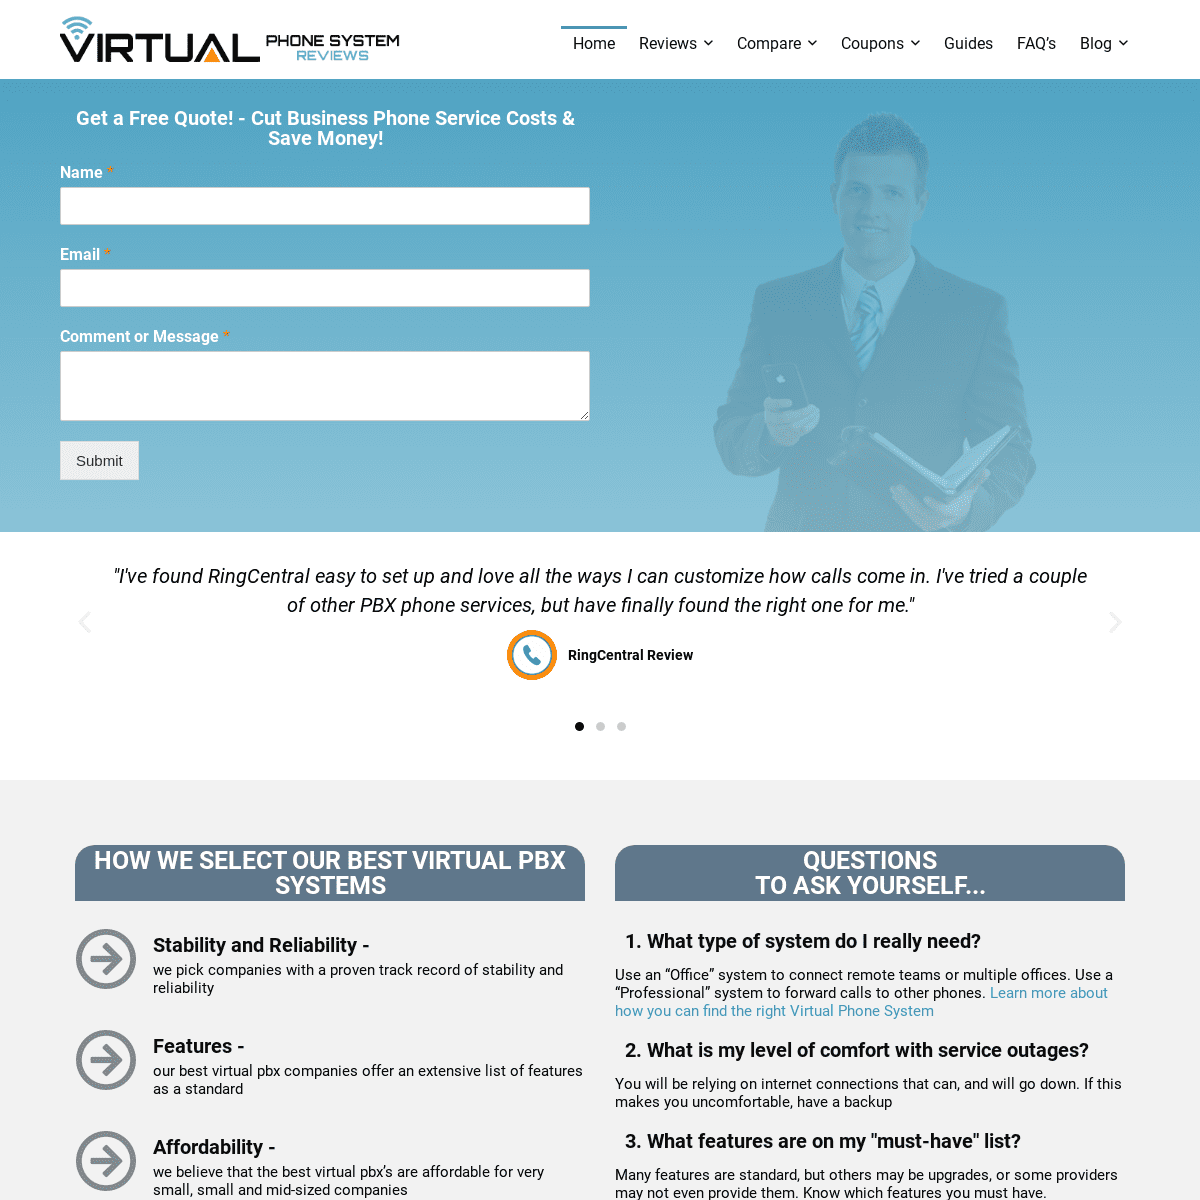 A complete backup of https://virtualphonesystemreviews.com